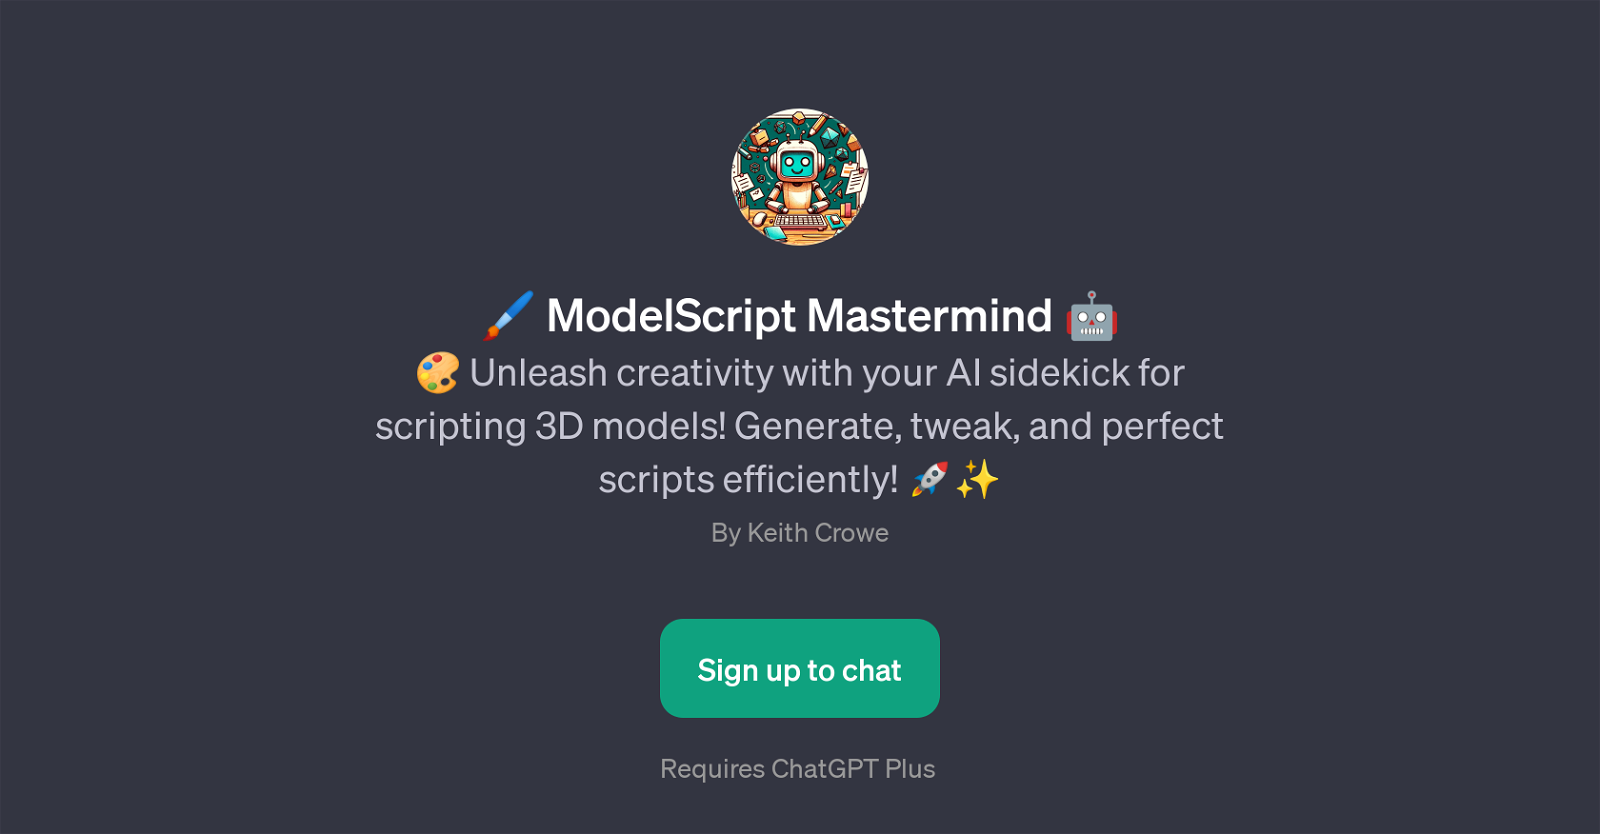 ModelScript Mastermind website